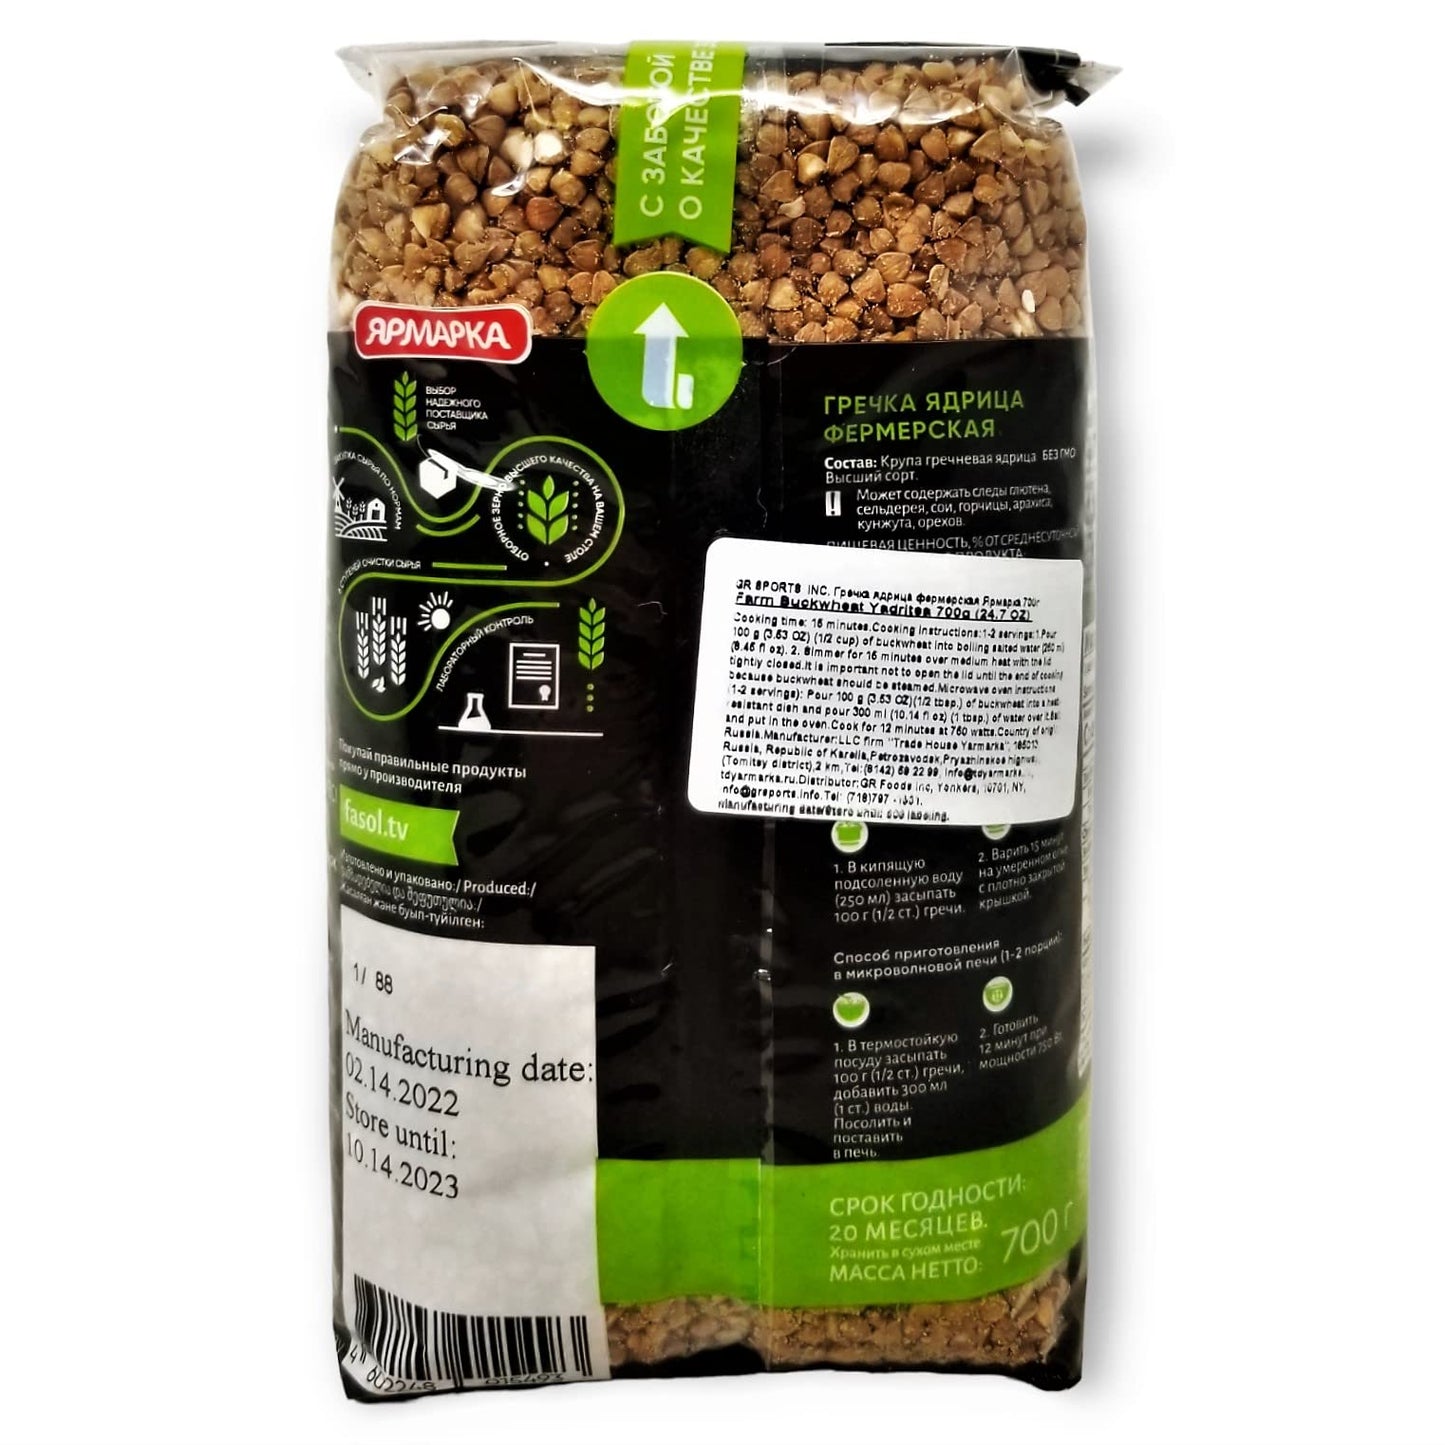 Yarmarka Farm Rosted Buckwheat Groats 700g/1.54lb Non GMO, Kosher, Diet Friendly (Pack of 6)